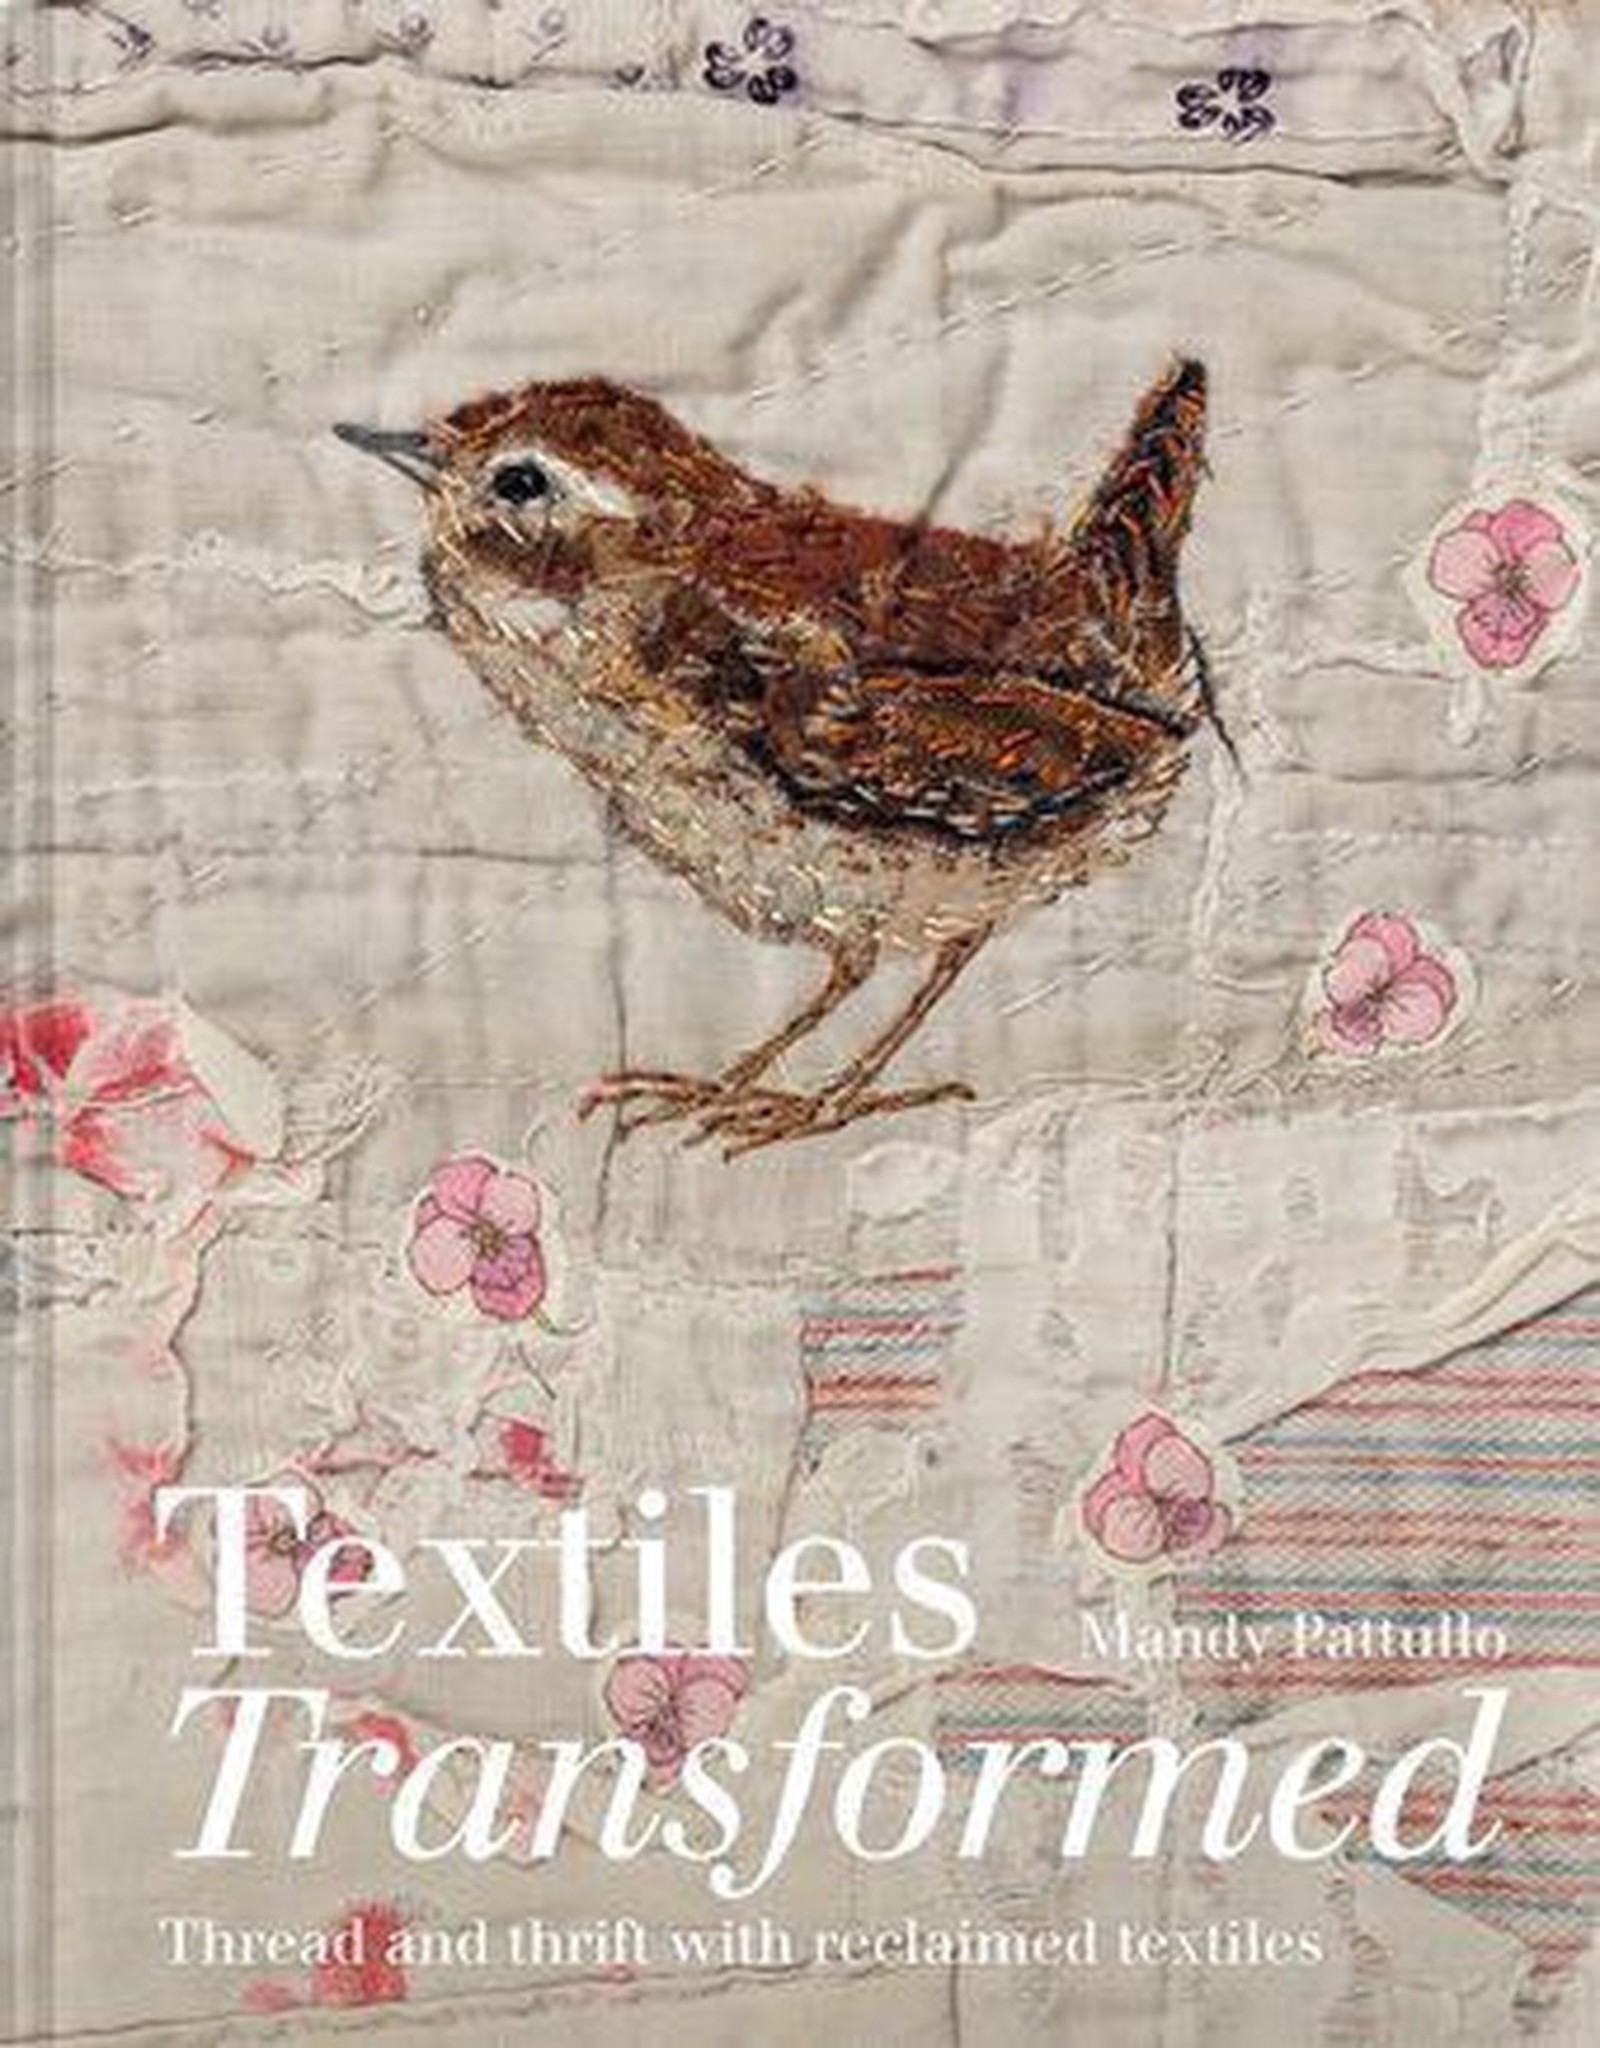 Transforming textiles